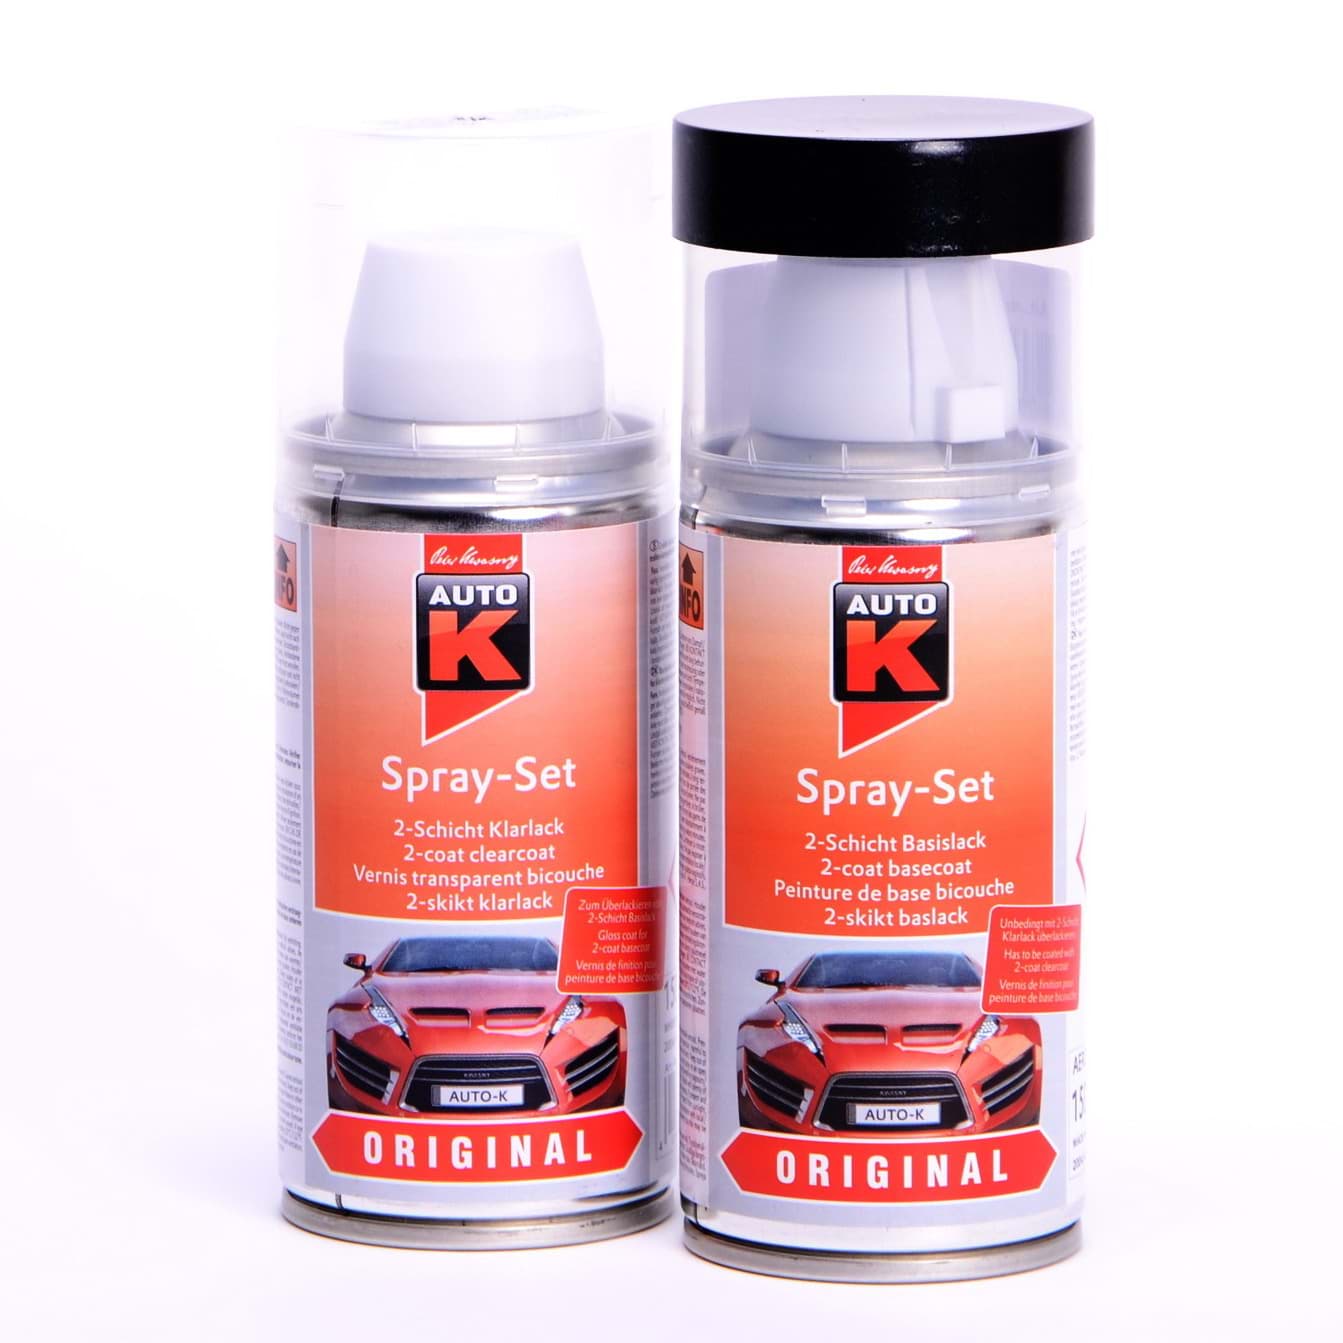 Afbeelding van Auto-K Spray-Set Autolack für Renault 632 Gris Boreal met 43439